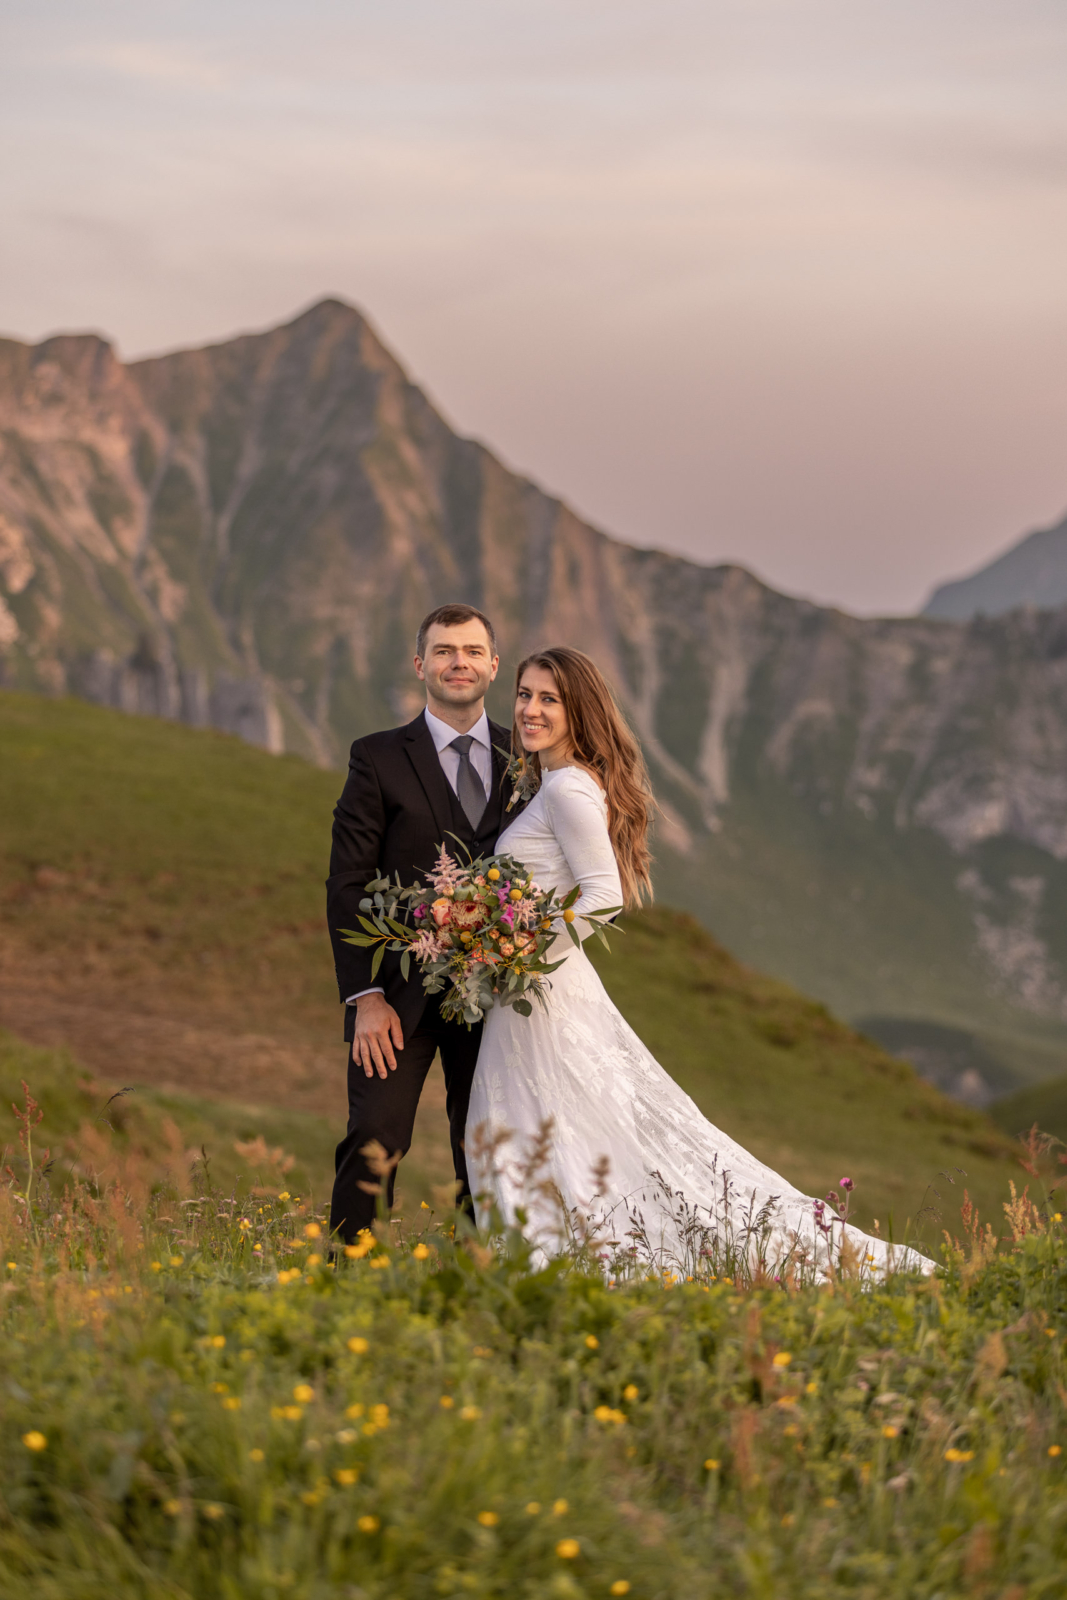 Weddingphotos in the Alps